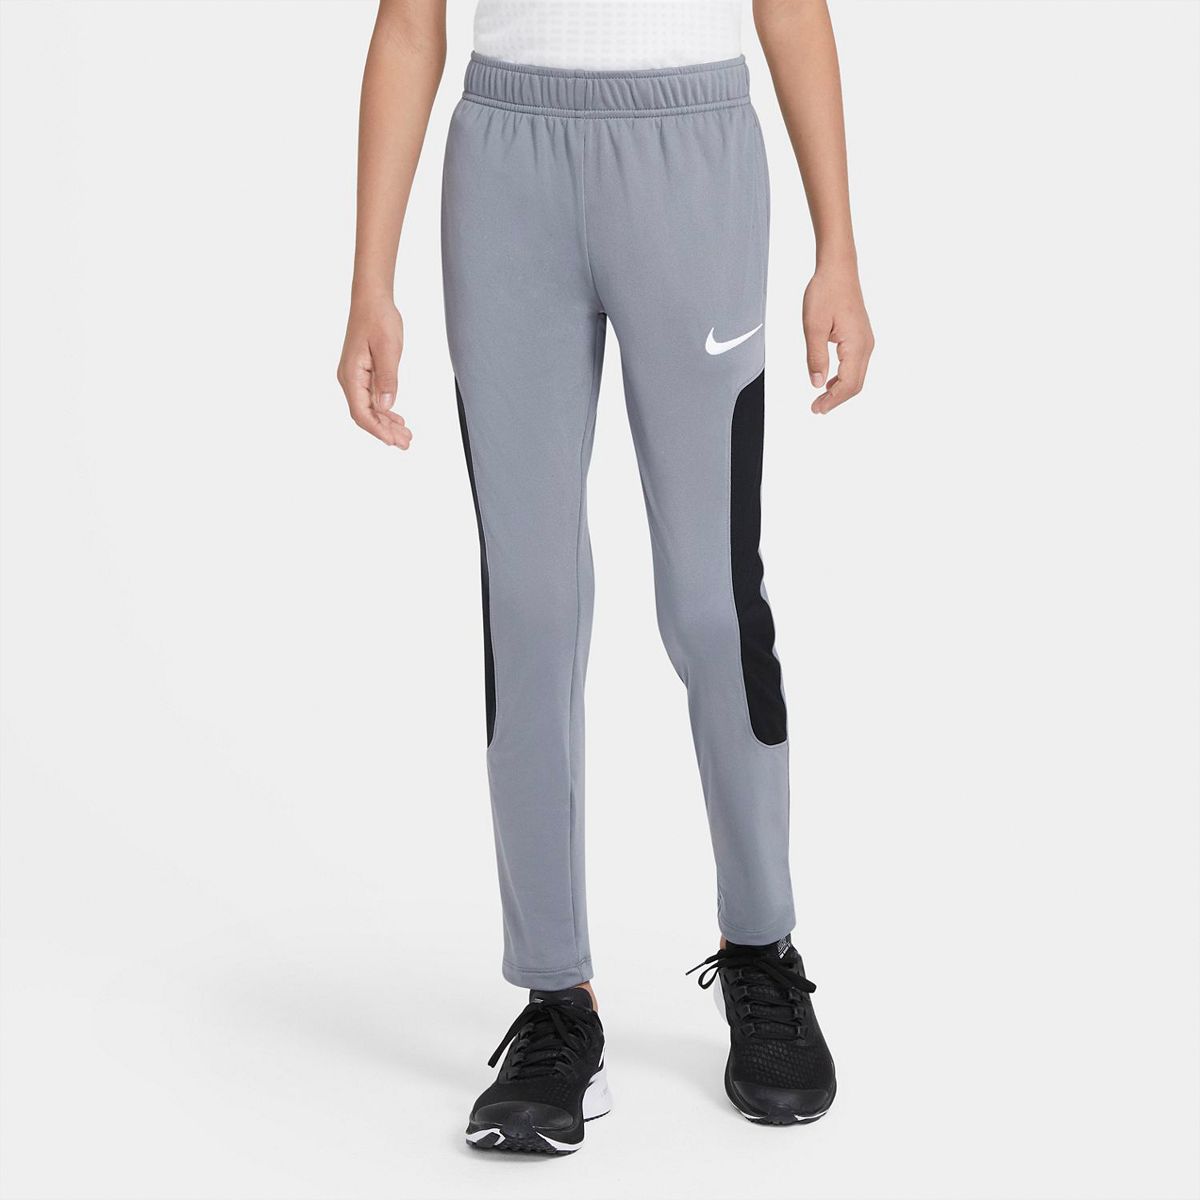 Nike Boys 8-20 Training Pants (Smoke Gray Black White) $9.62 + Free Shipping on Orders $49+